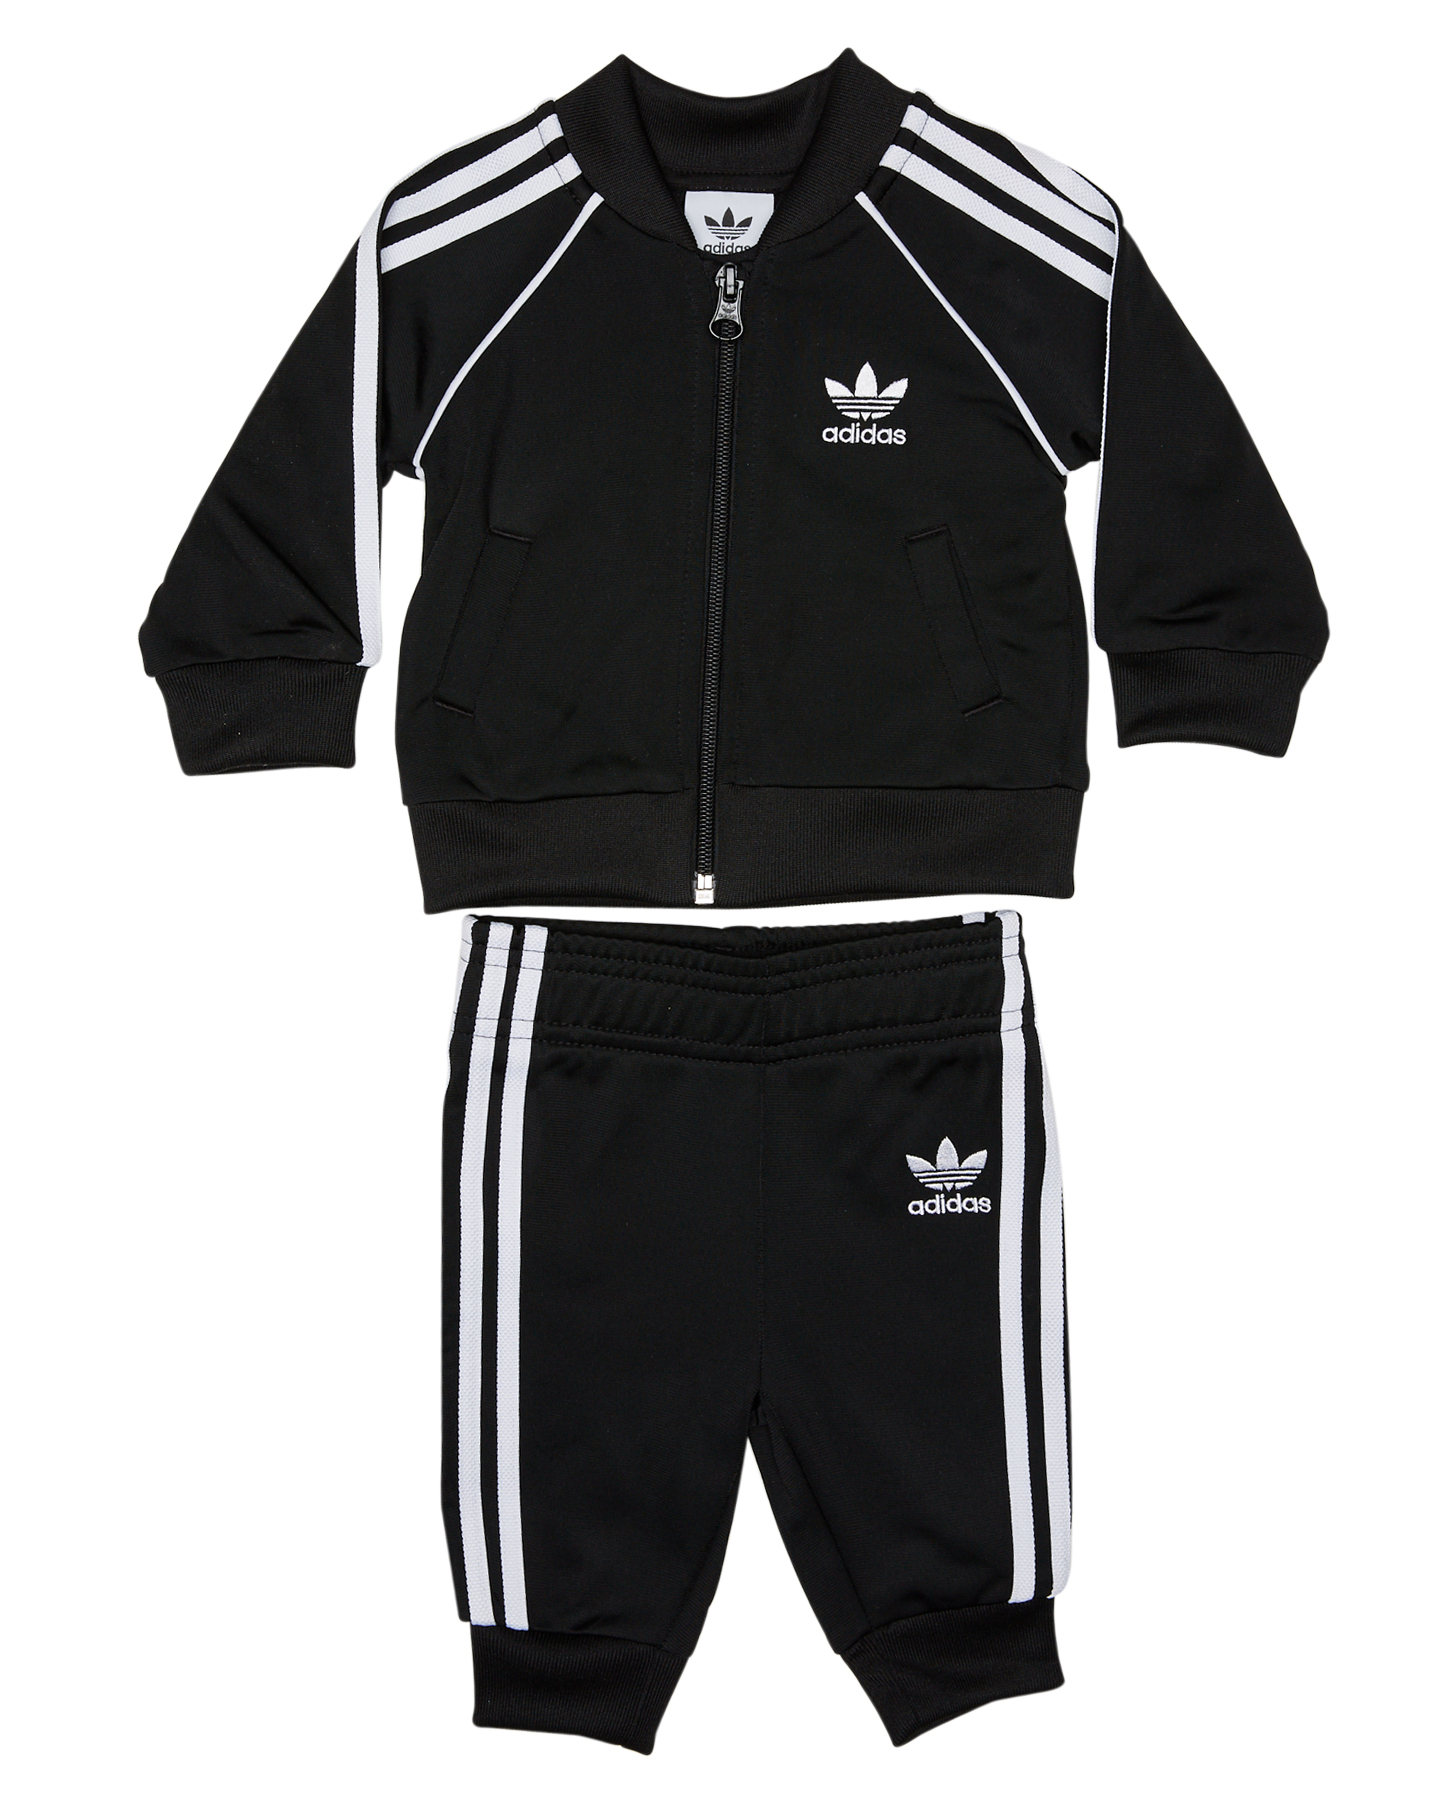 Adidas Boys Superstar Tracksuit Set - Baby - Black White | SurfStitch